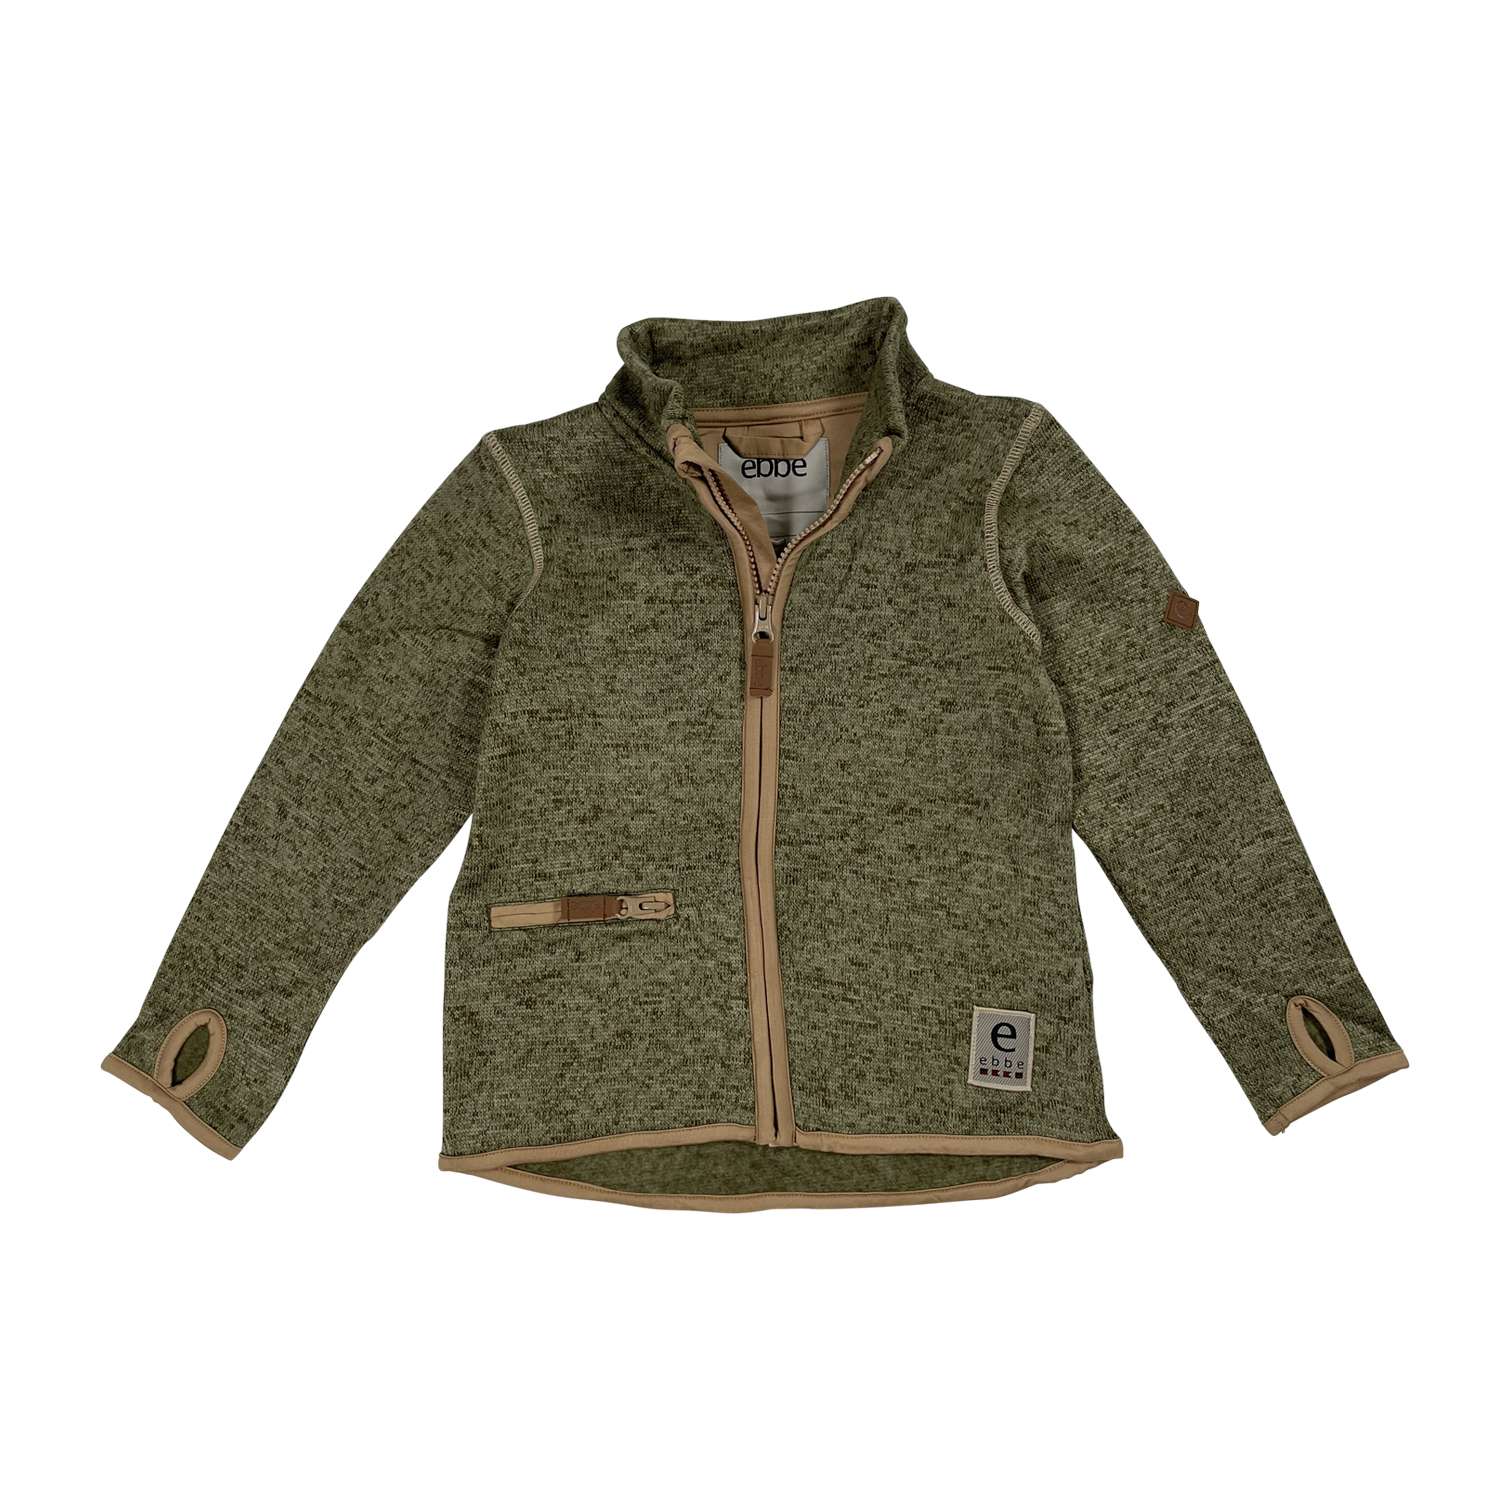 Mattis Knit Fleece Jacket, olive green